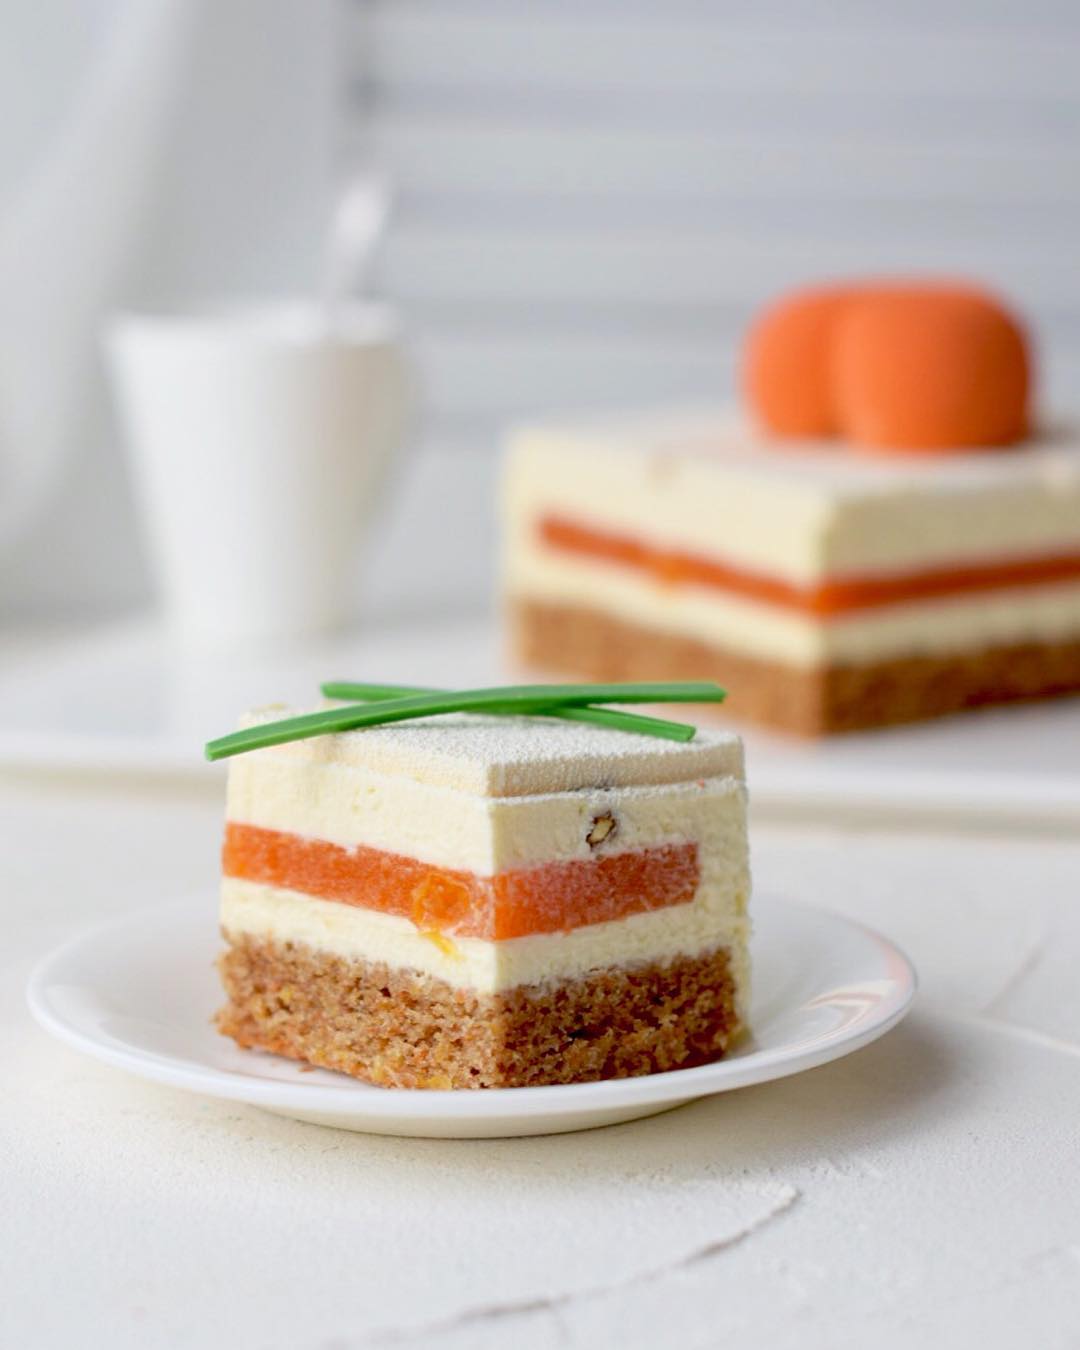 Carrot cake by Hans Ovando